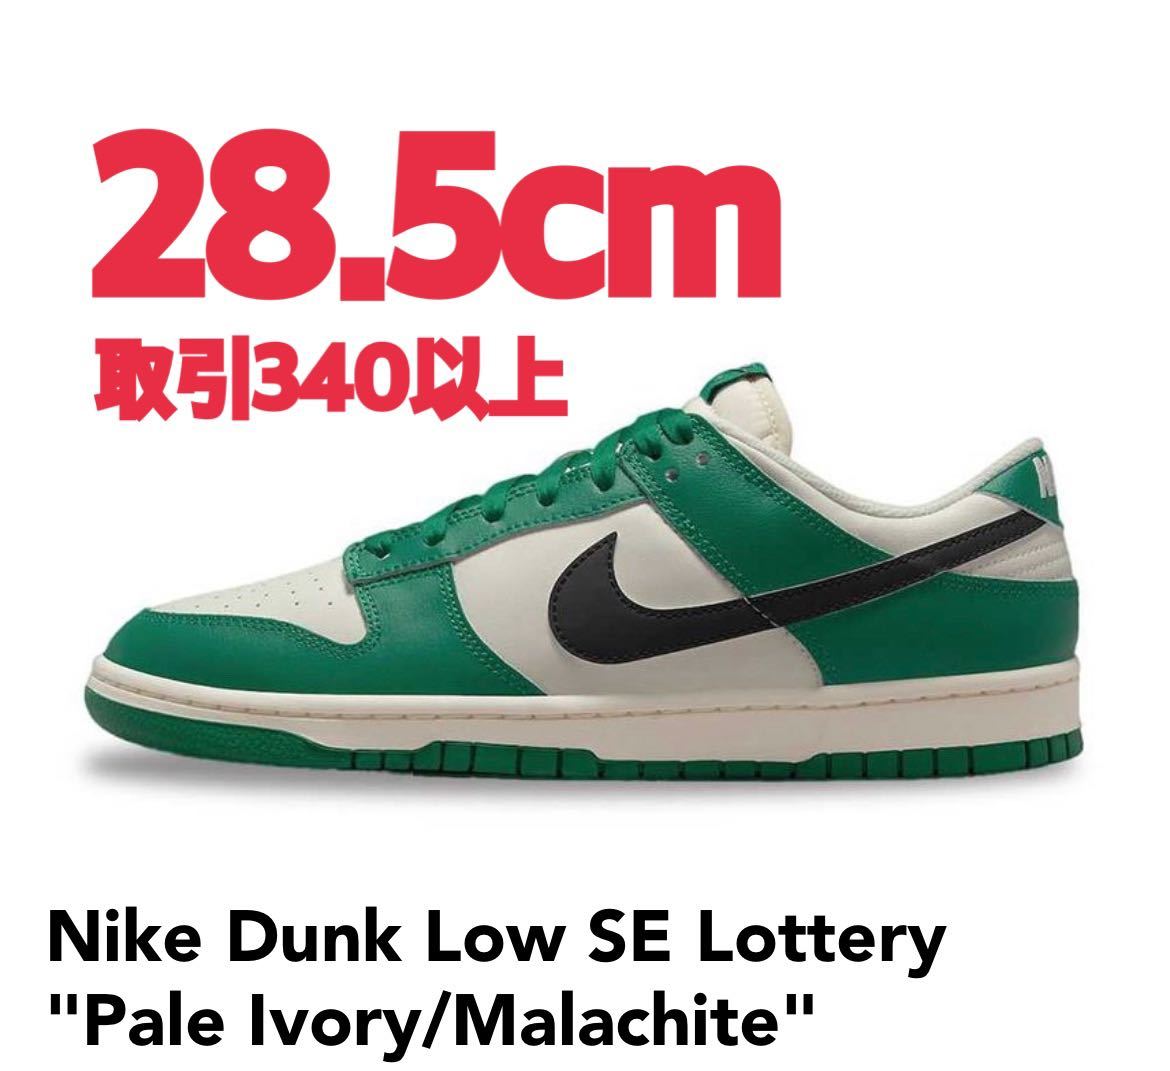 28.5cm NIKE Dunk Low SE Lottery Pale Ivory/Malachiteナイキ ダンク ロー SE ロッタリー  ペールアイボリー/マラカイト グリーン